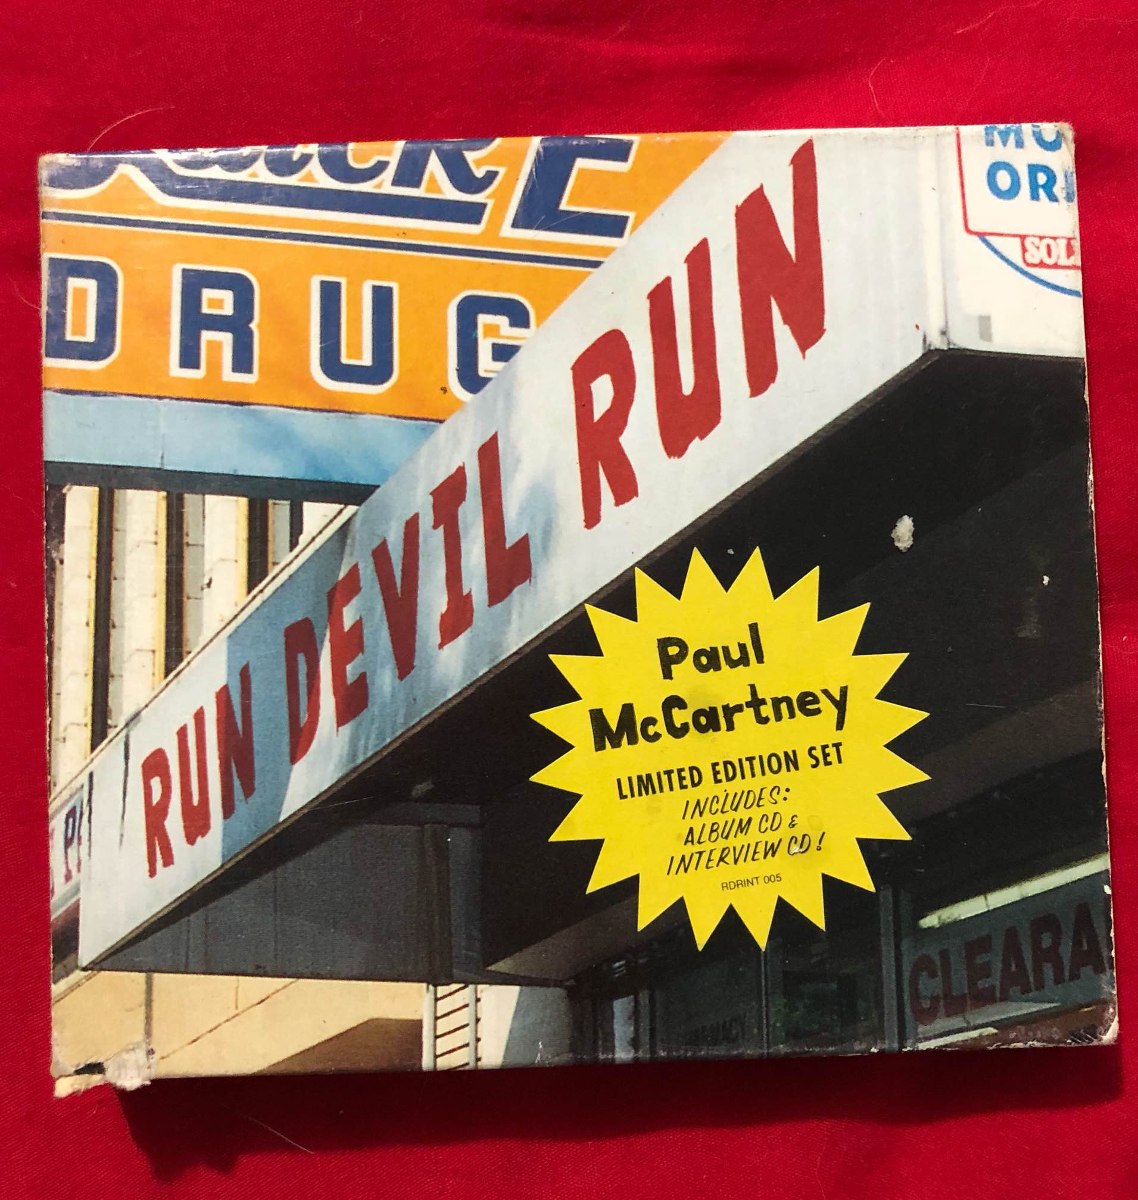 Resultado de imagen para paul mccartney run devil run album